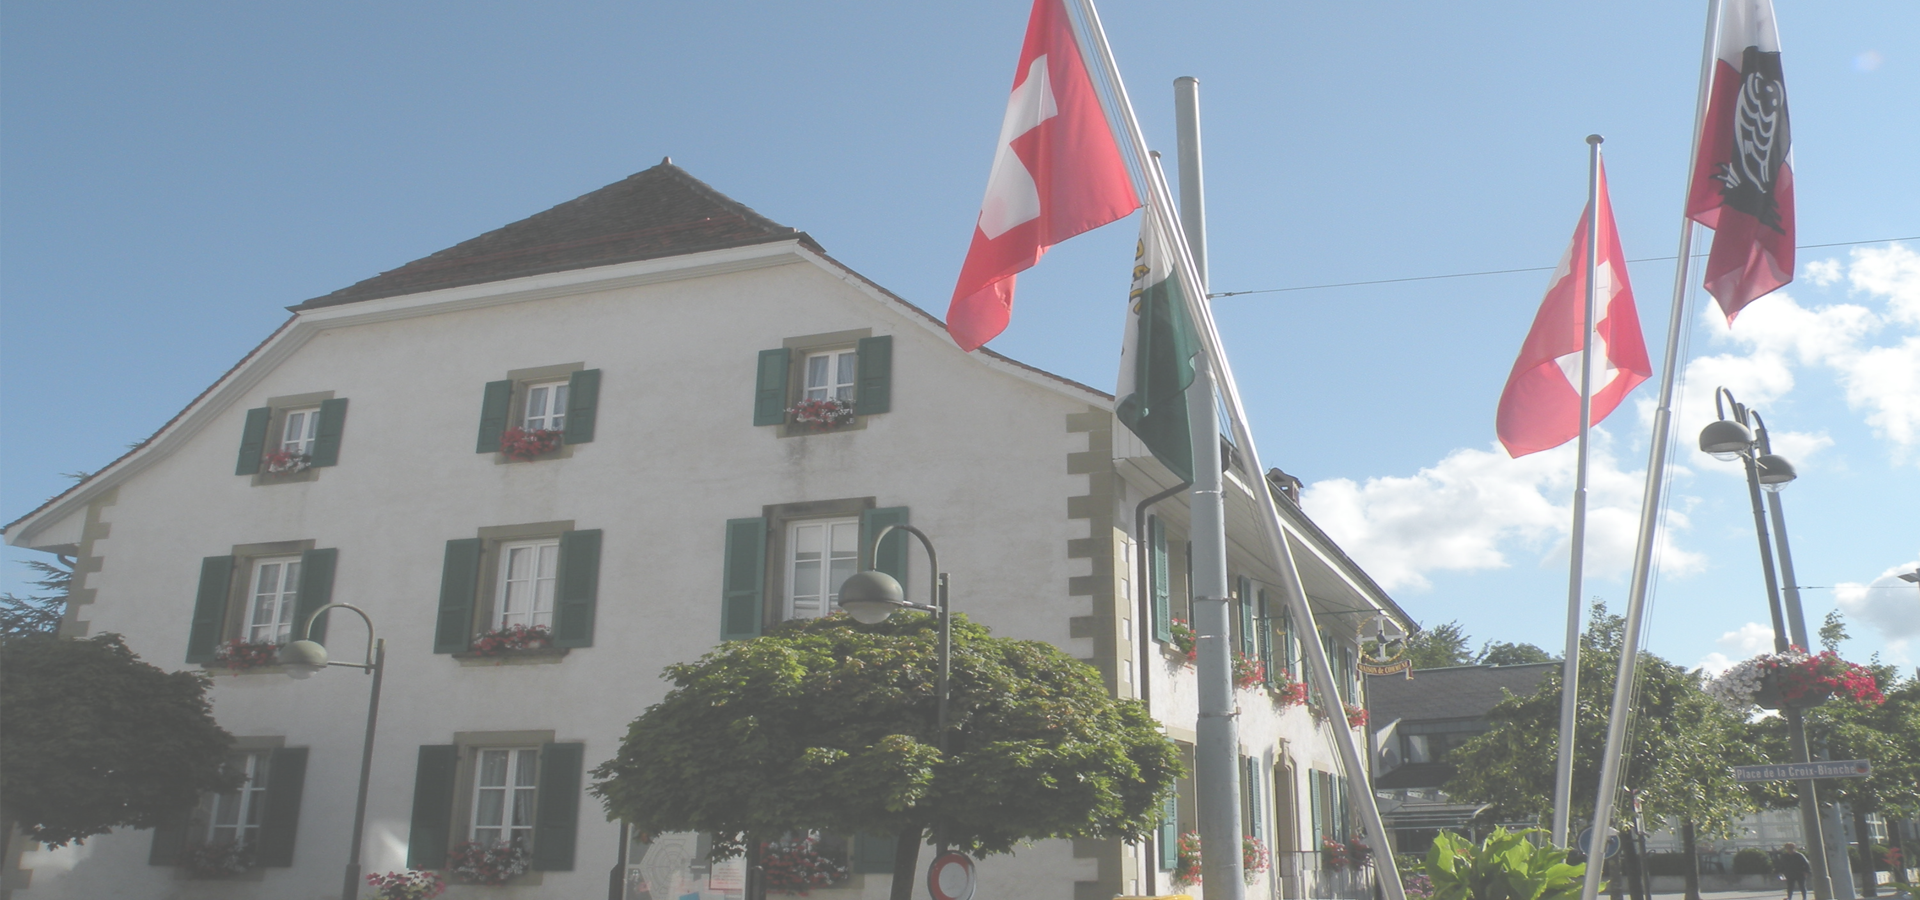 <b>Épalinges, Canton of Vaud, Switzerland</b>